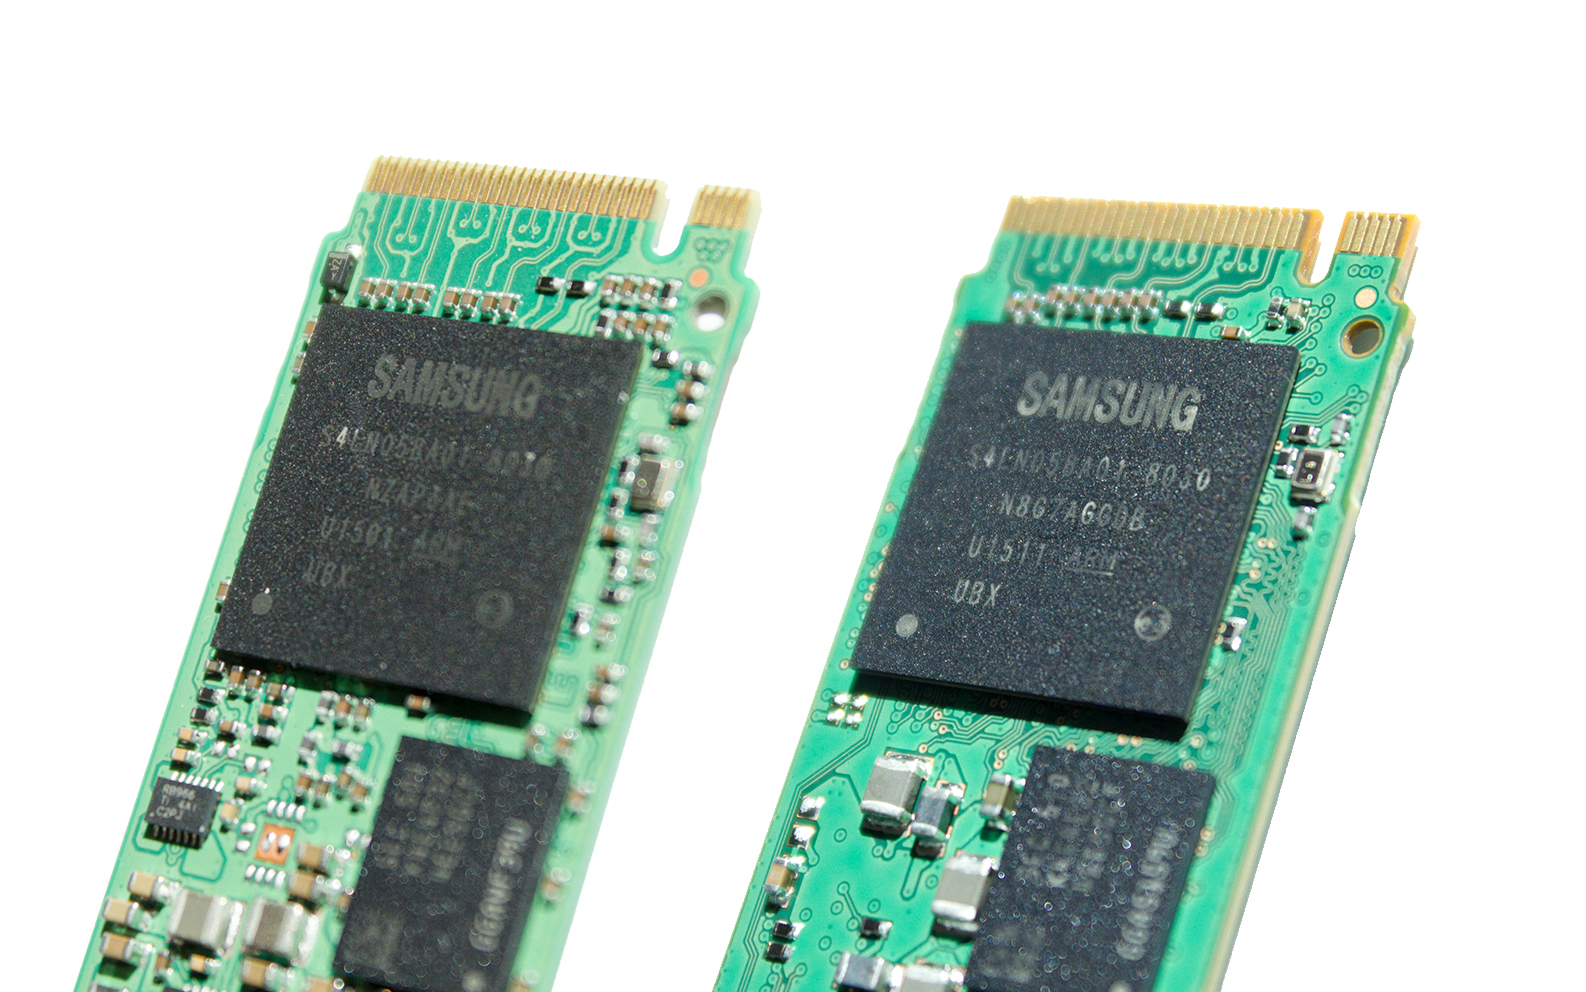 Samsung (256GB) PCIe SSD Review